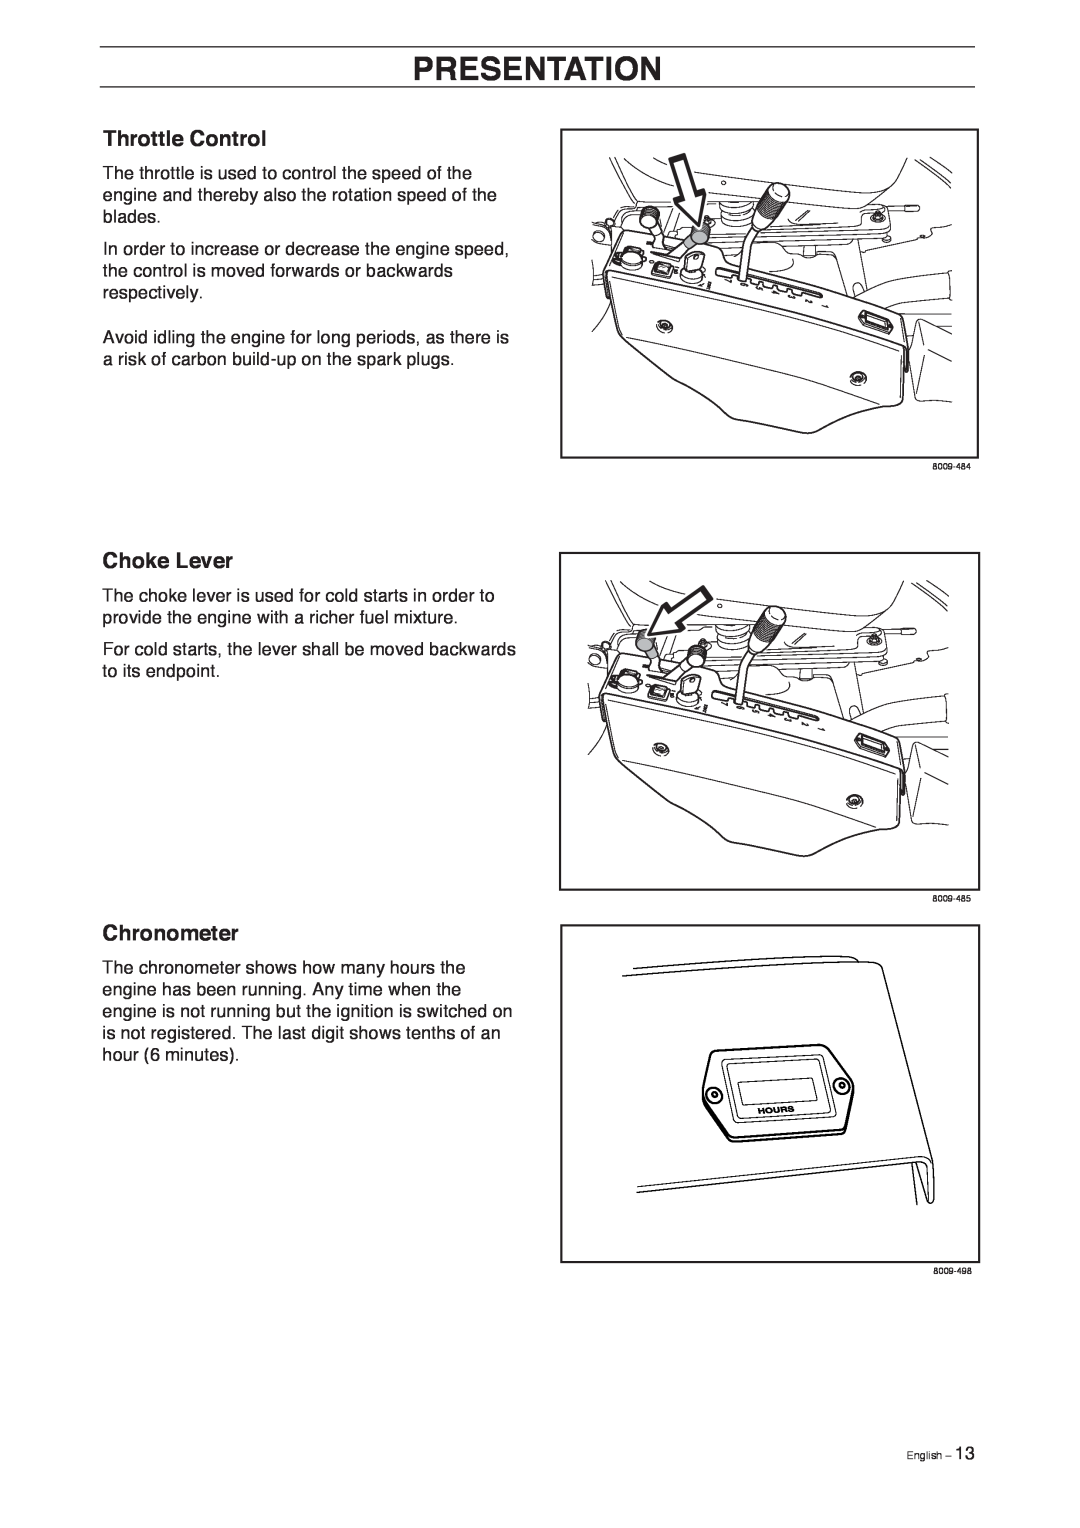 Husqvarna Pro 18 AWD manual Throttle Control, Choke Lever, Chronometer, Presentation 